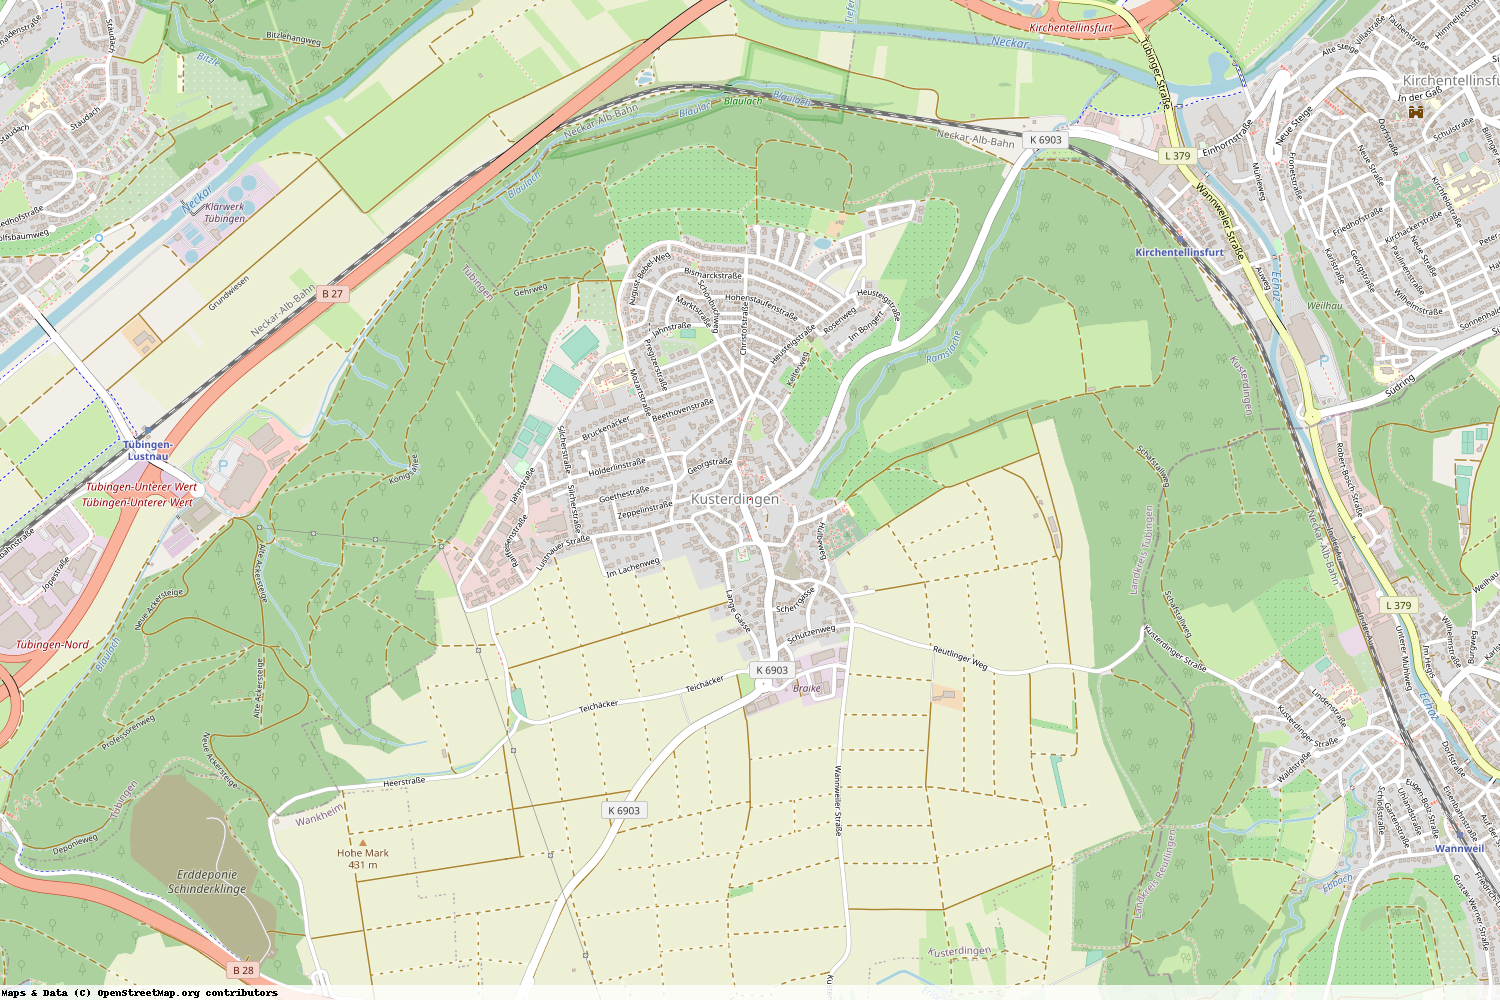 Ist gerade Stromausfall in Baden-Württemberg - Tübingen - Kusterdingen?